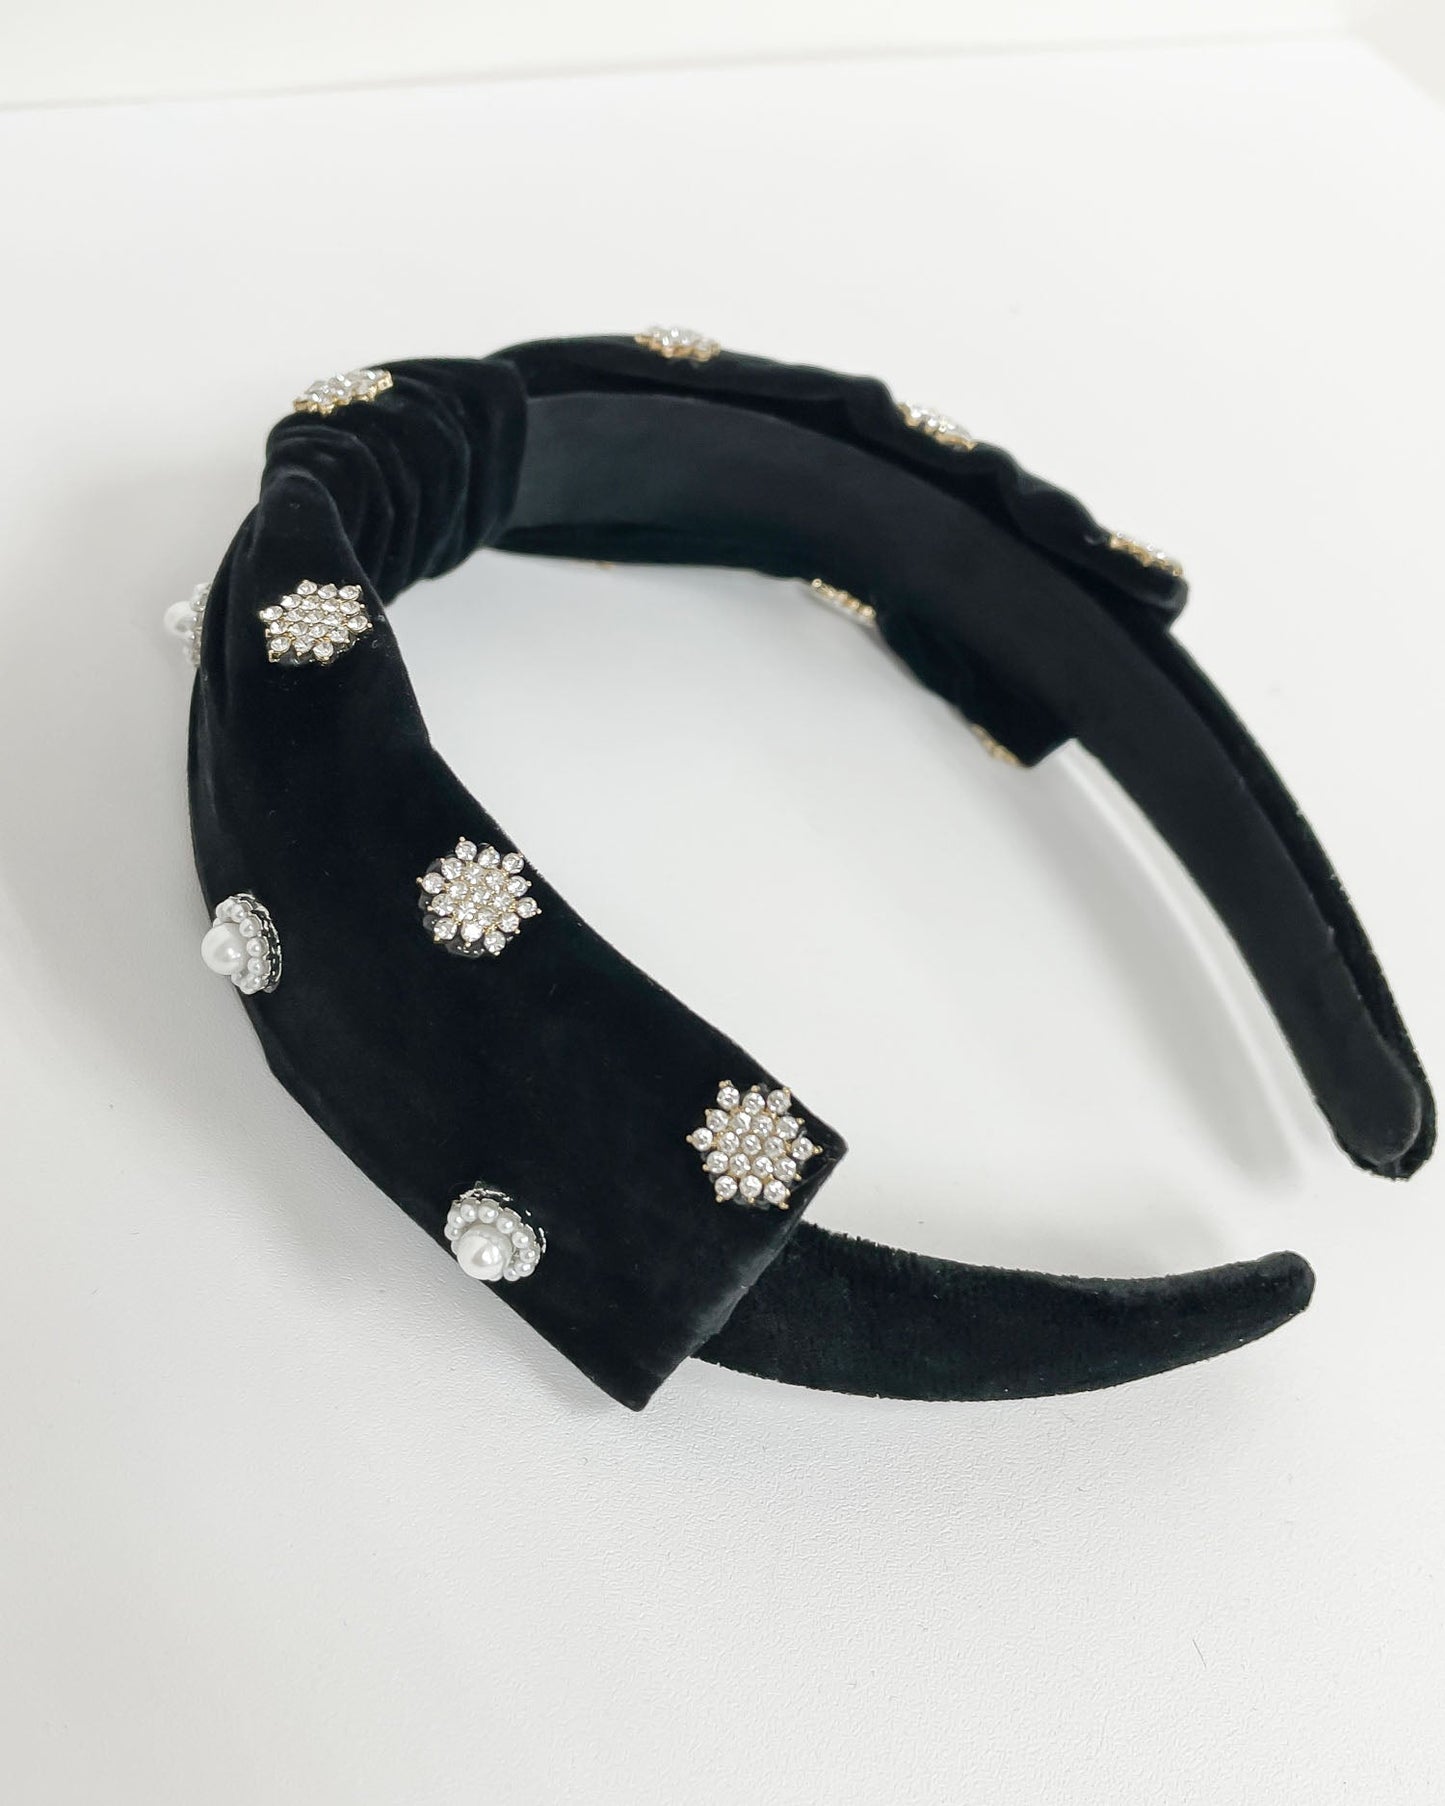 Copy of black velvet jeweled knot headband *pre-order*